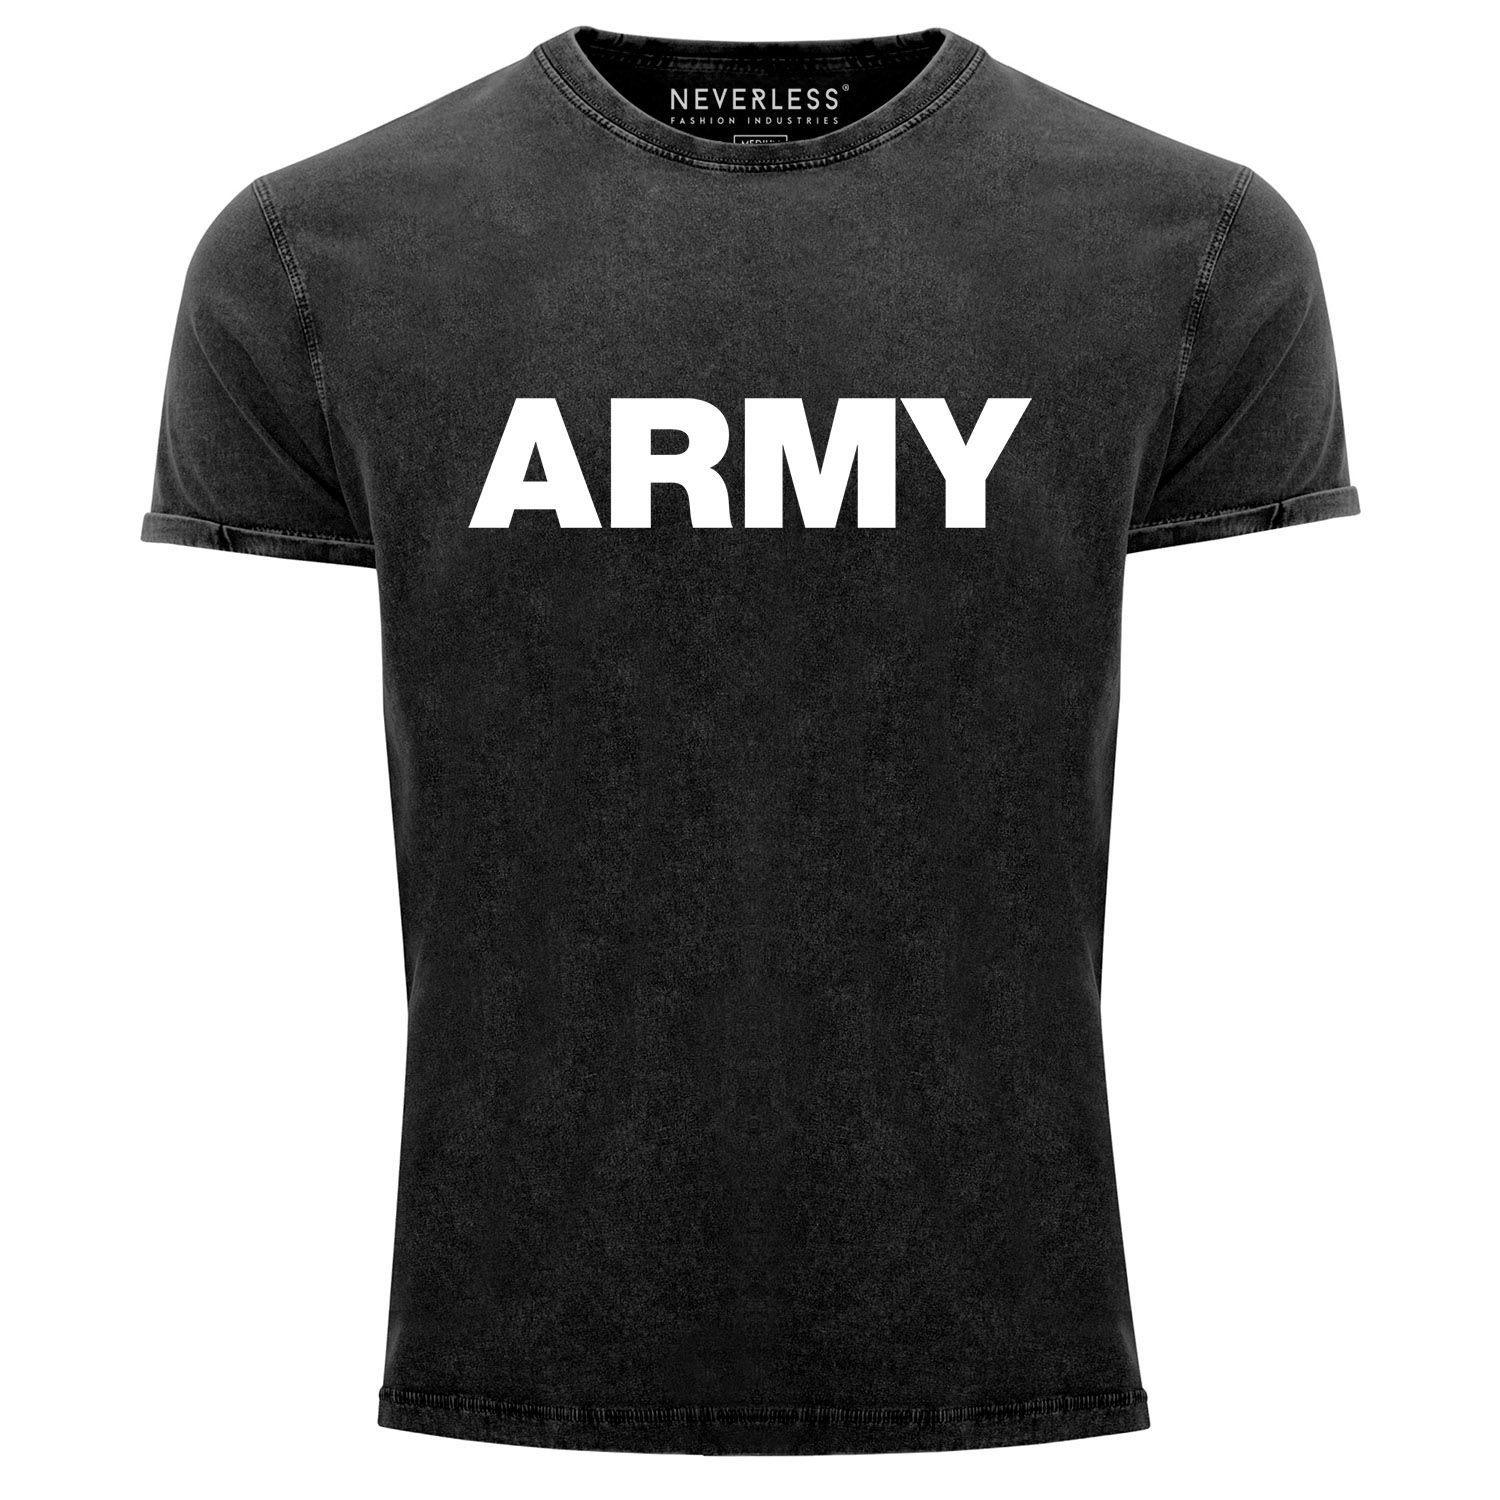 Neverless Print-Shirt Herren Vintage Shirt Army Printshirt T-Shirt Used Look Slim Fit Neverless® mit Print schwarz